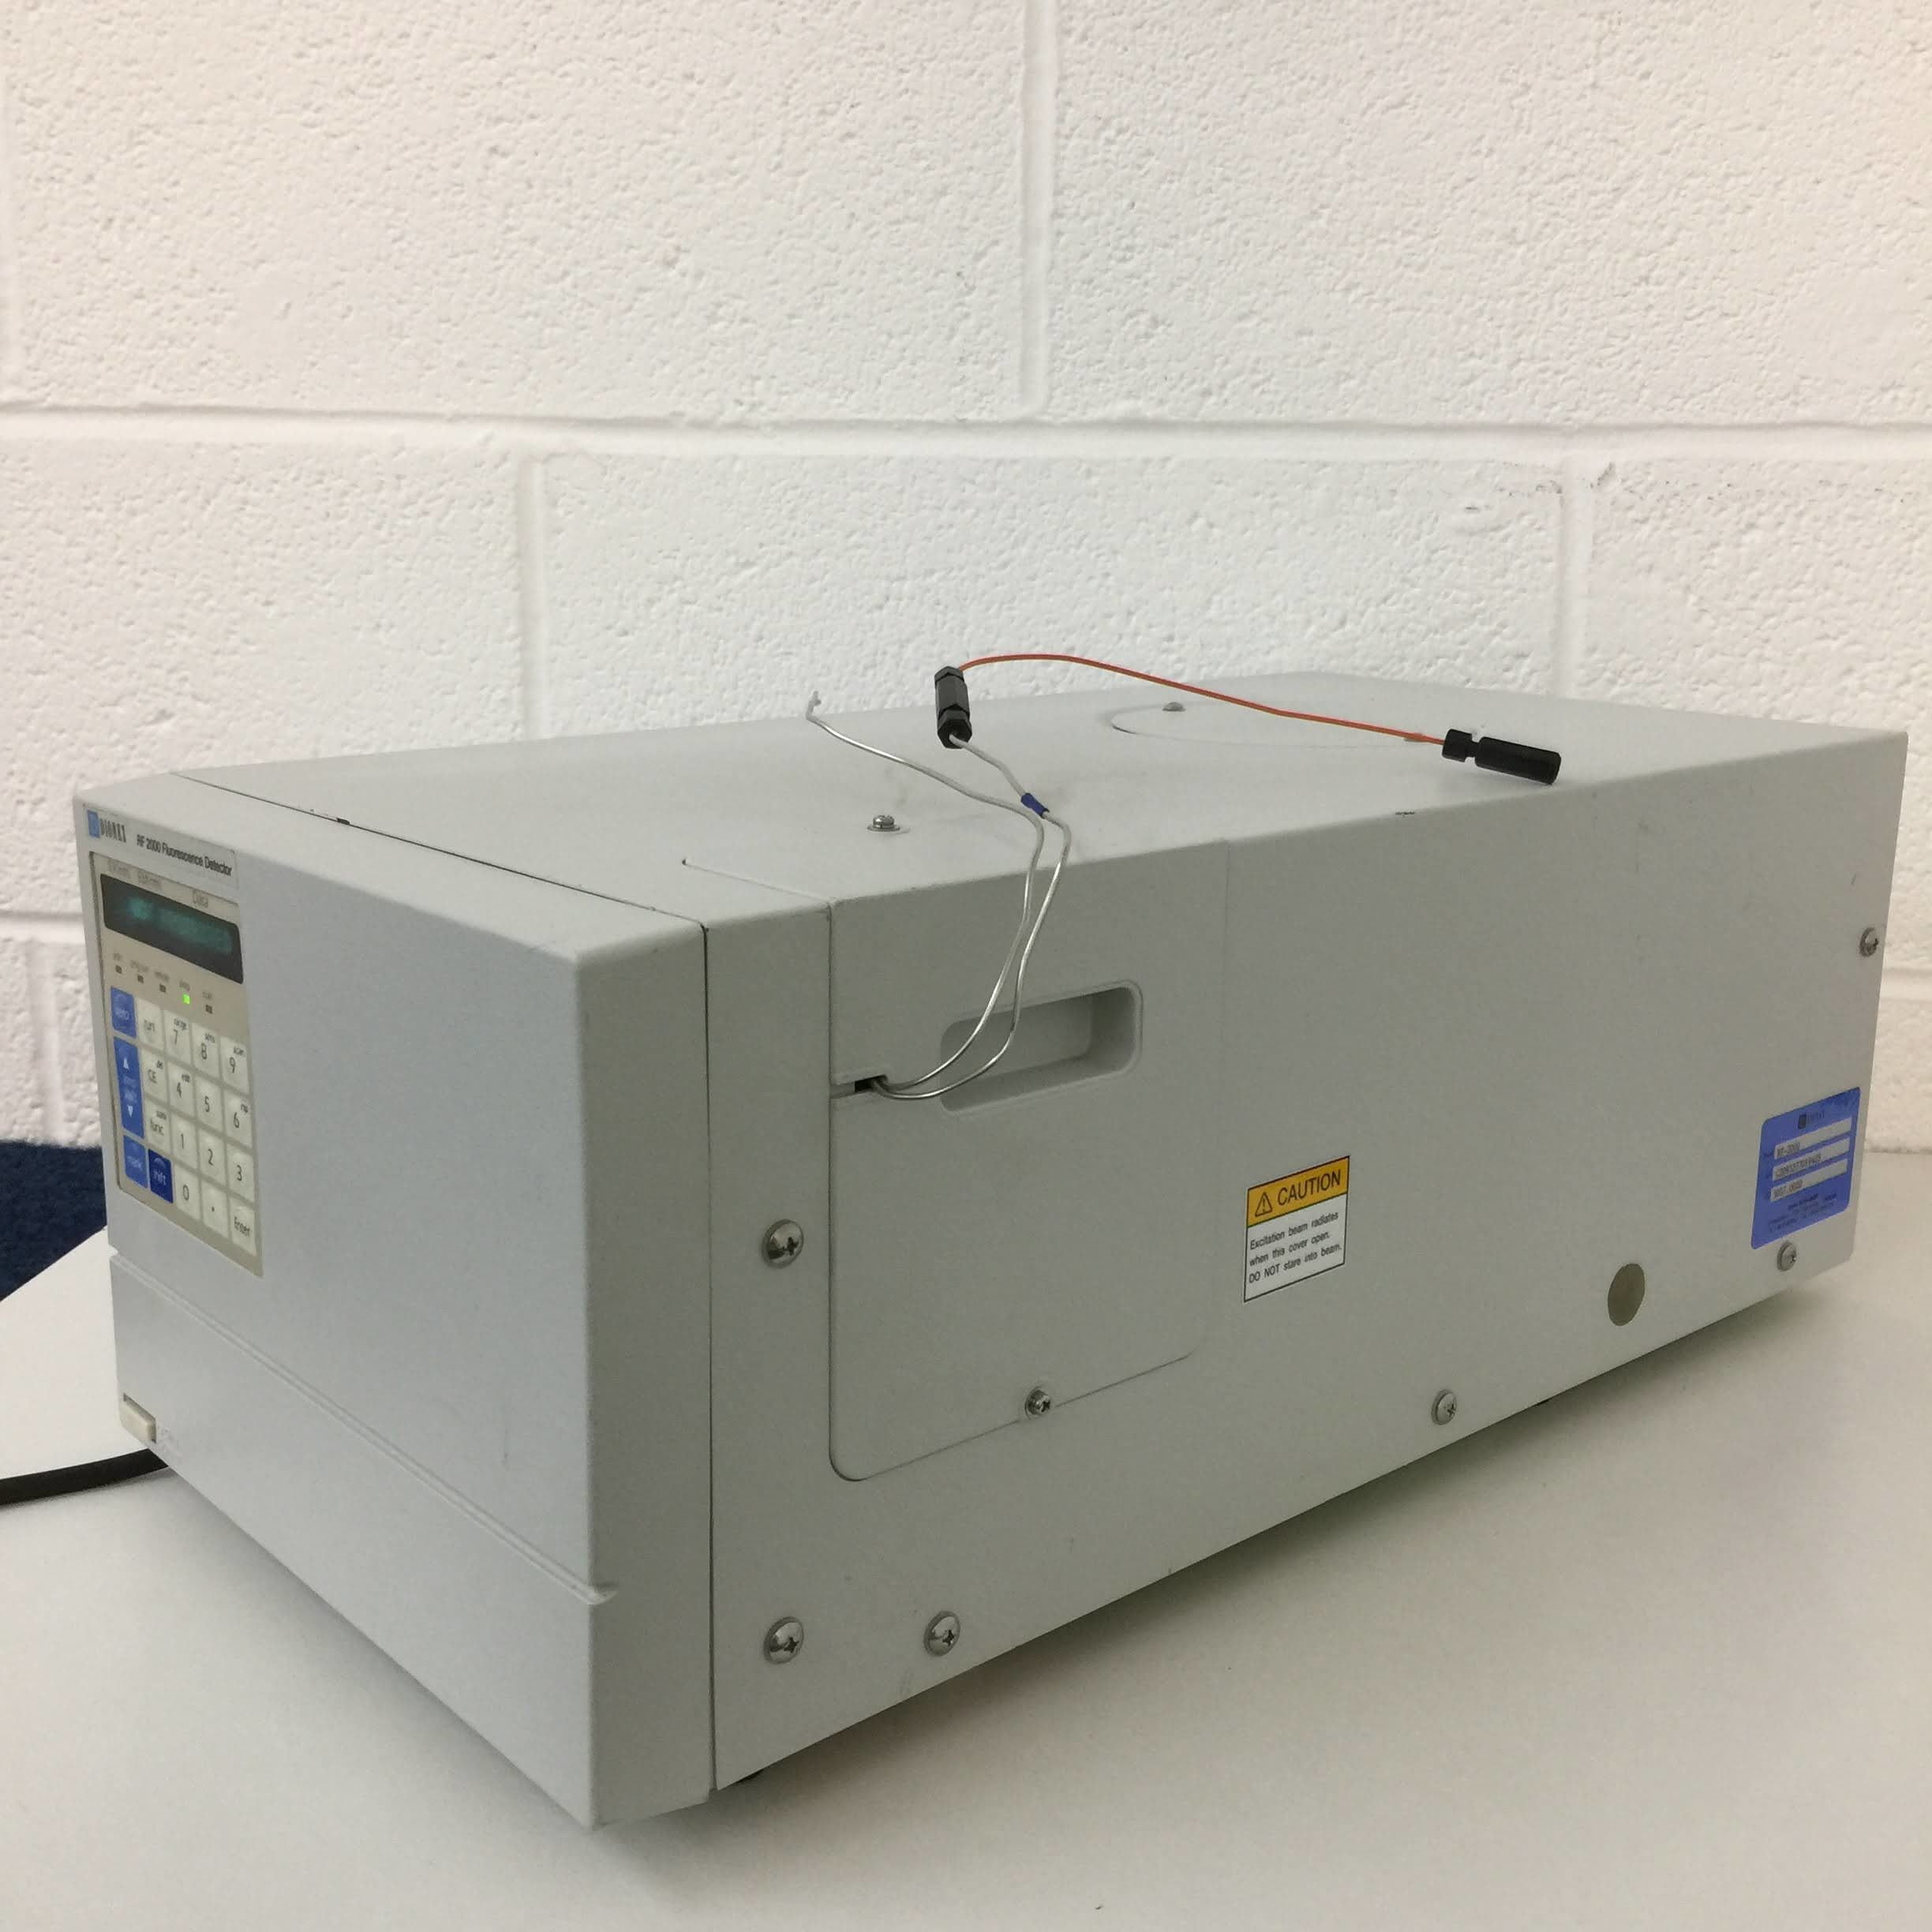 dionex rf-2000 fluorescence detector